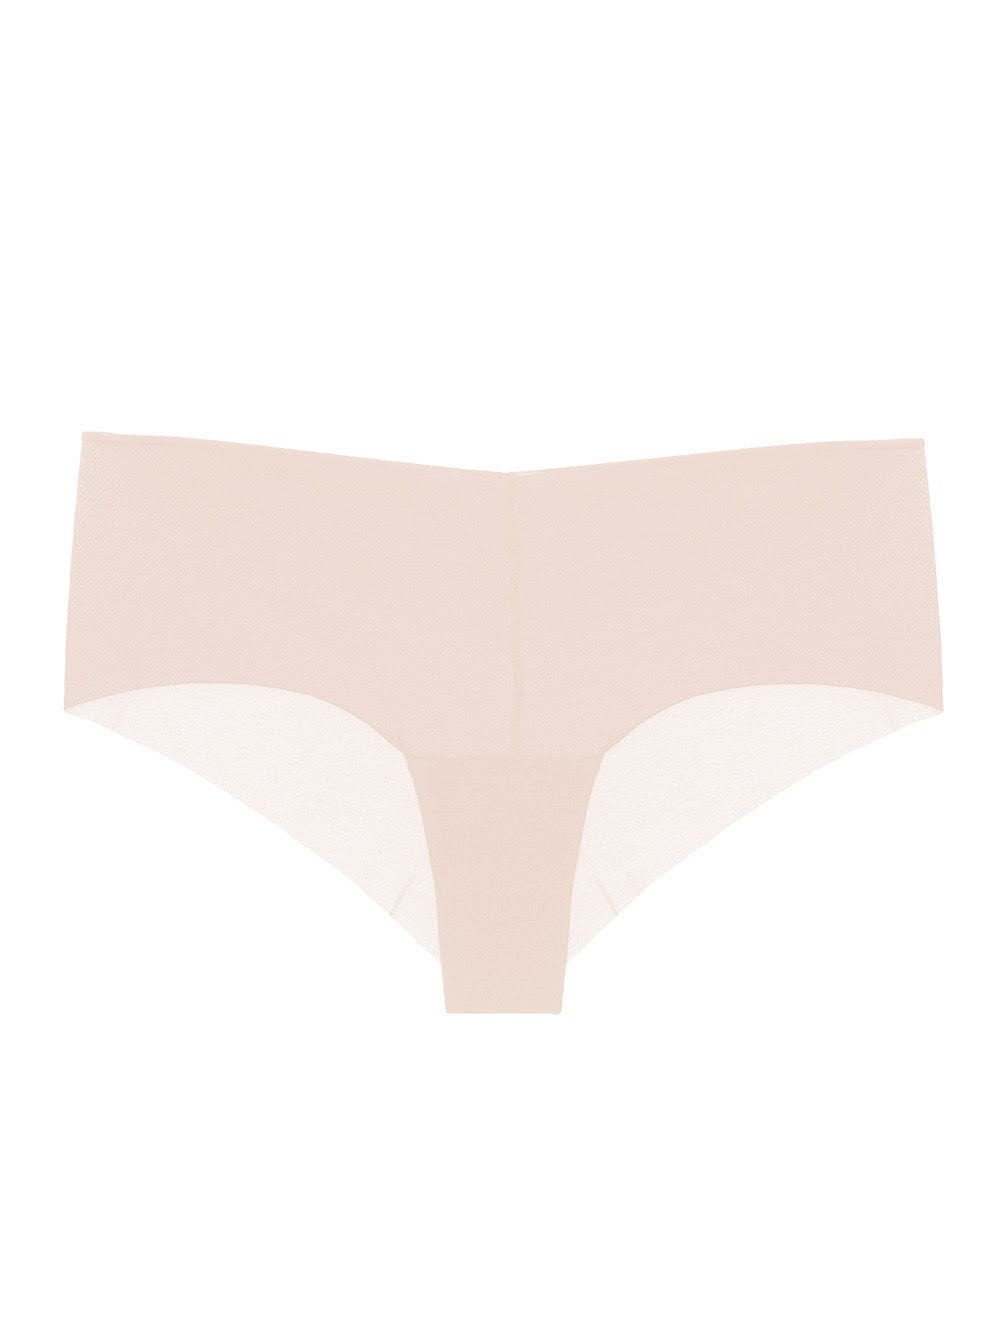 Cosabella Boyshorts Nude Rose / S/M Aire Hotpant - Nude Rose